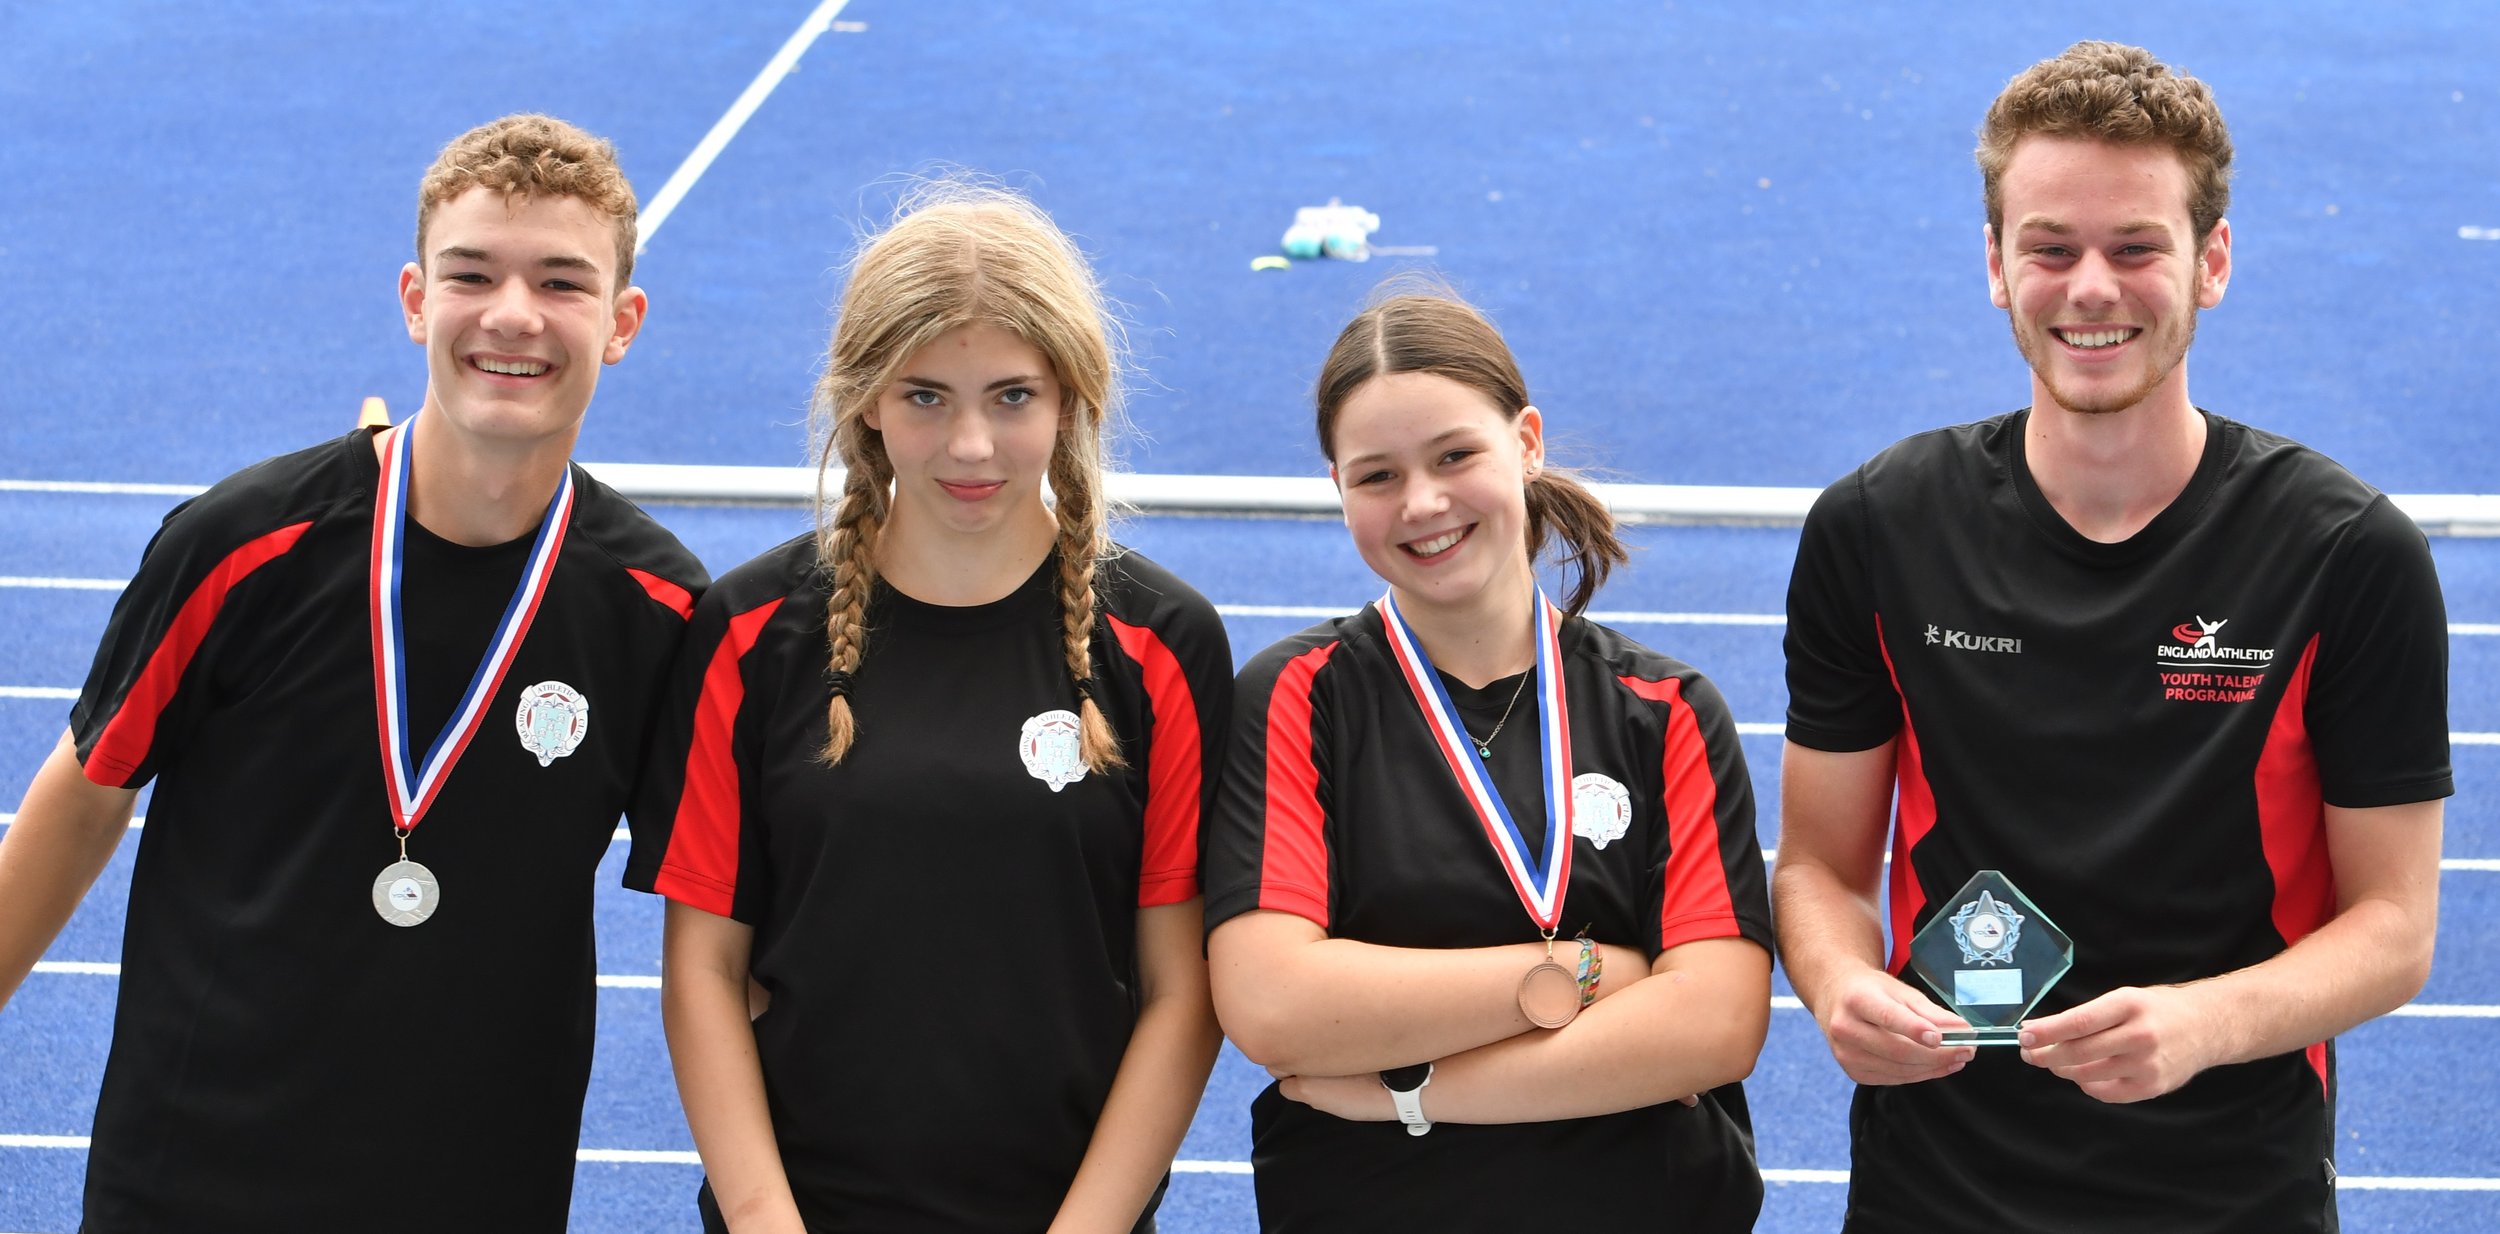 Youth Talent Programme - England Athletics